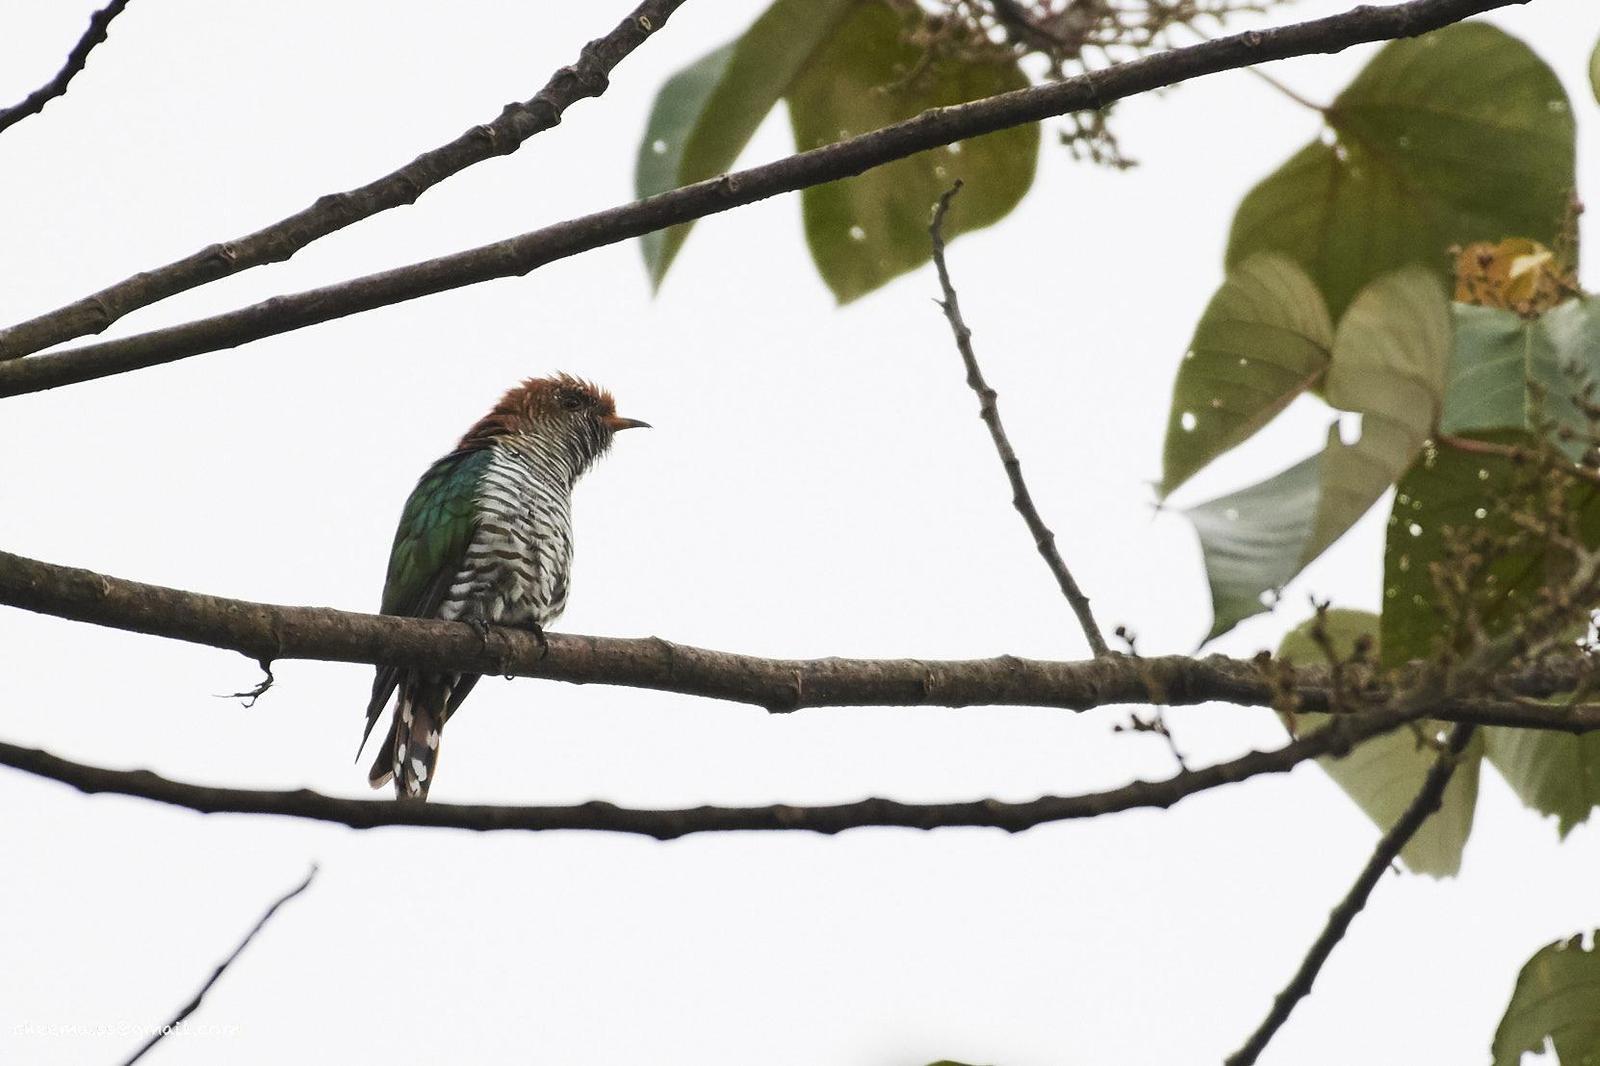 Asian Emerald Cuckoo Photo by Simepreet Cheema